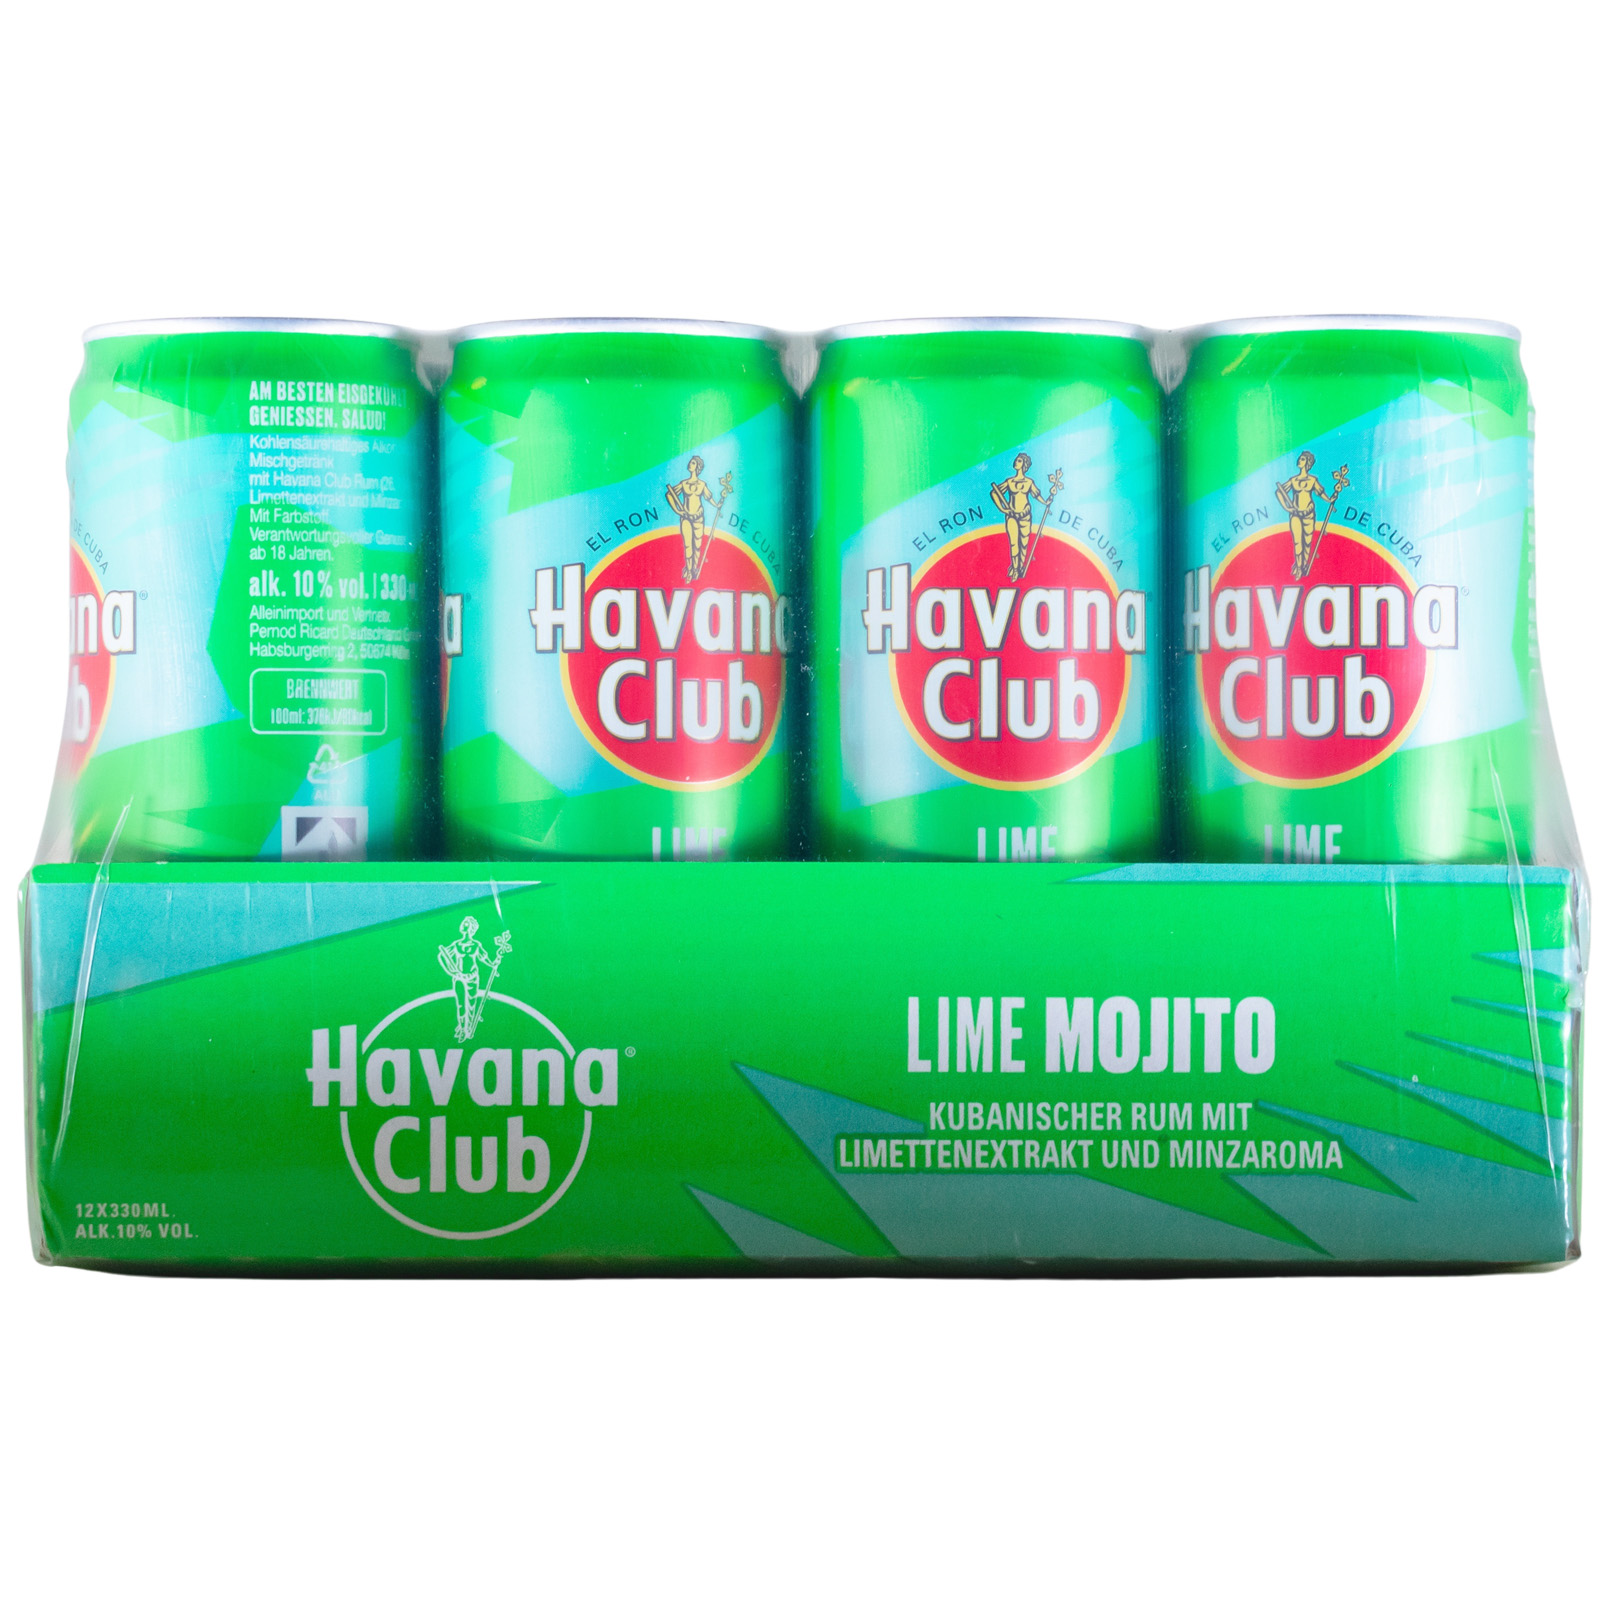 Paket [12 x 0,33L] Havana Club Lime Mojito Dose - 3,96L 10% vol